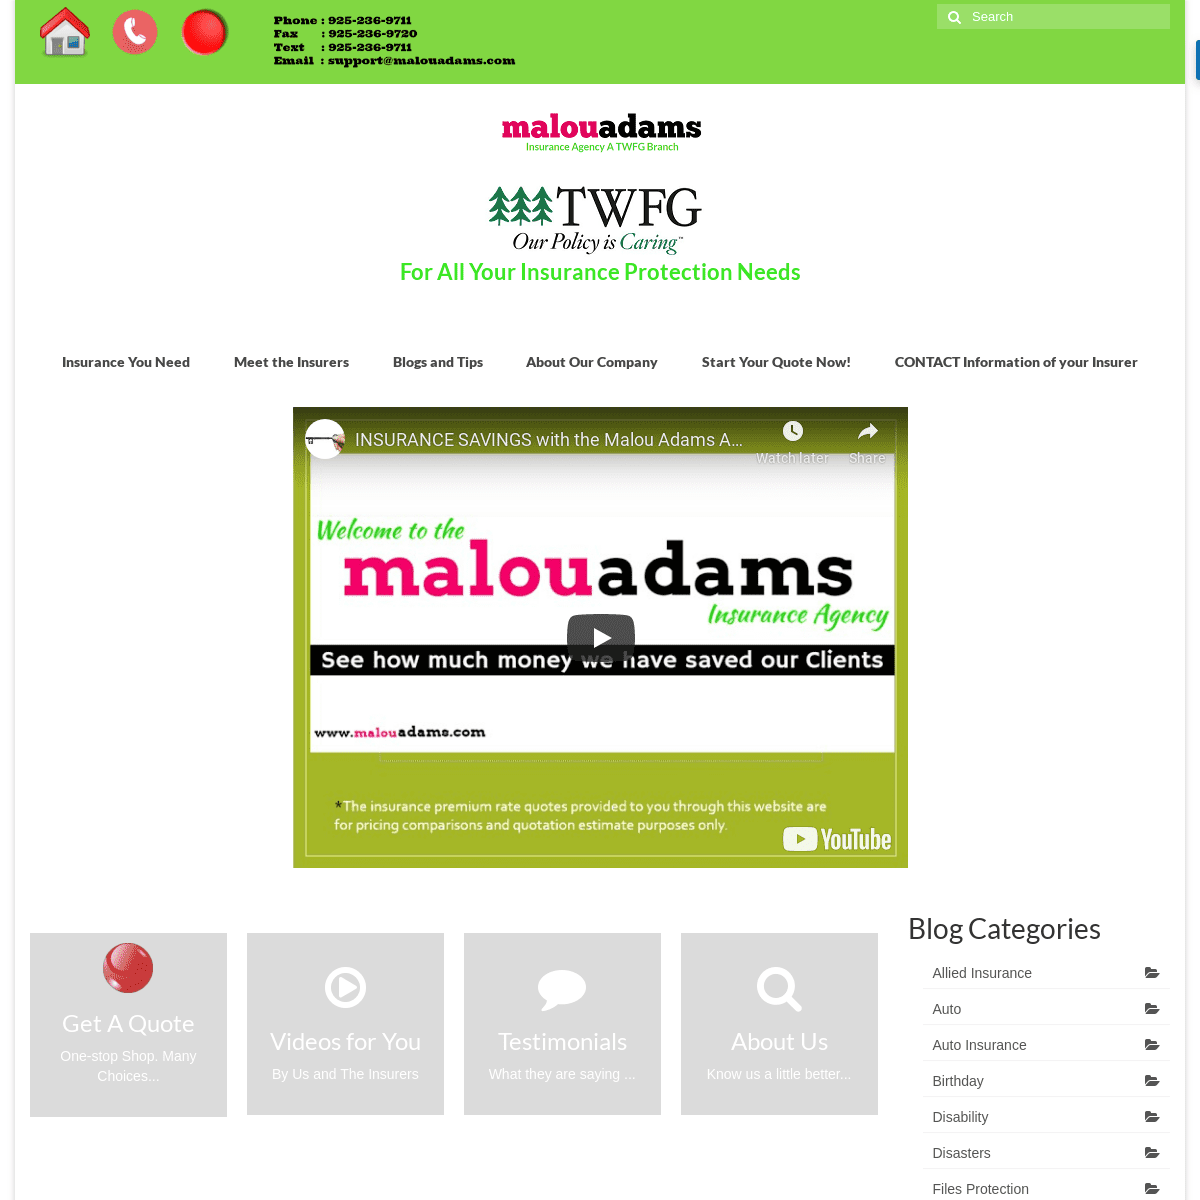 A complete backup of malouadams.com